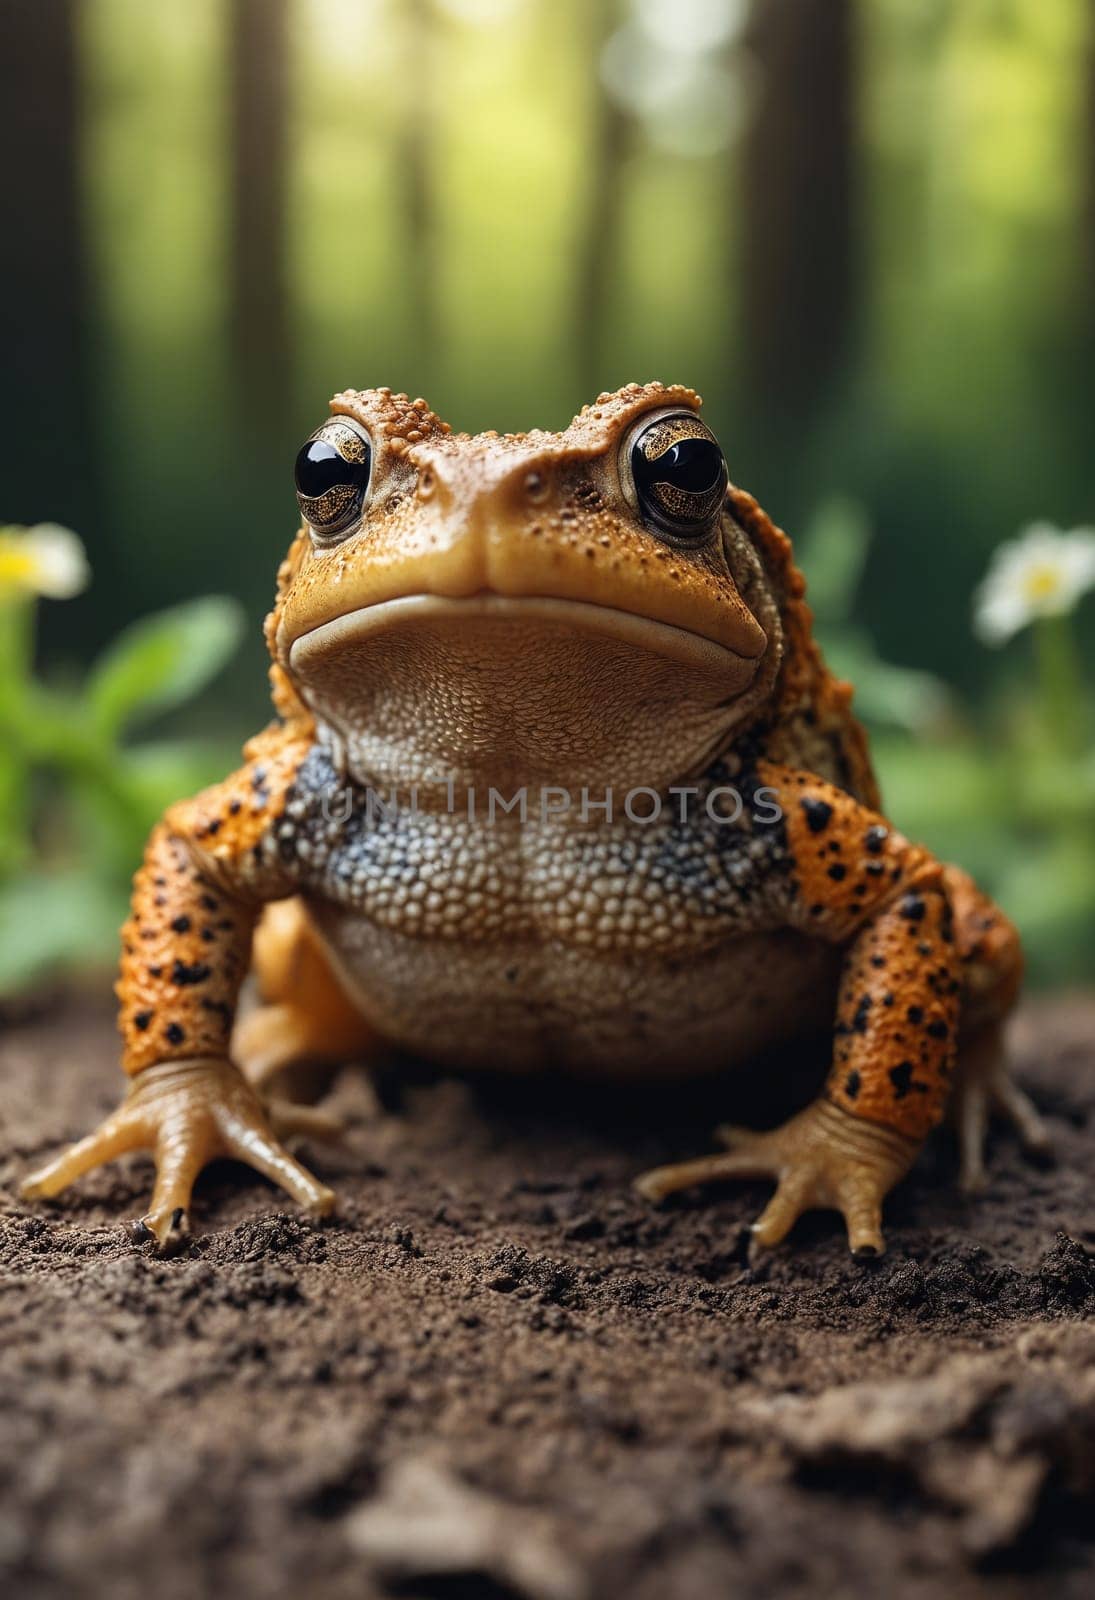 Closeup of a terrestrial organism, a true frog, in its natural habitat by Andre1ns